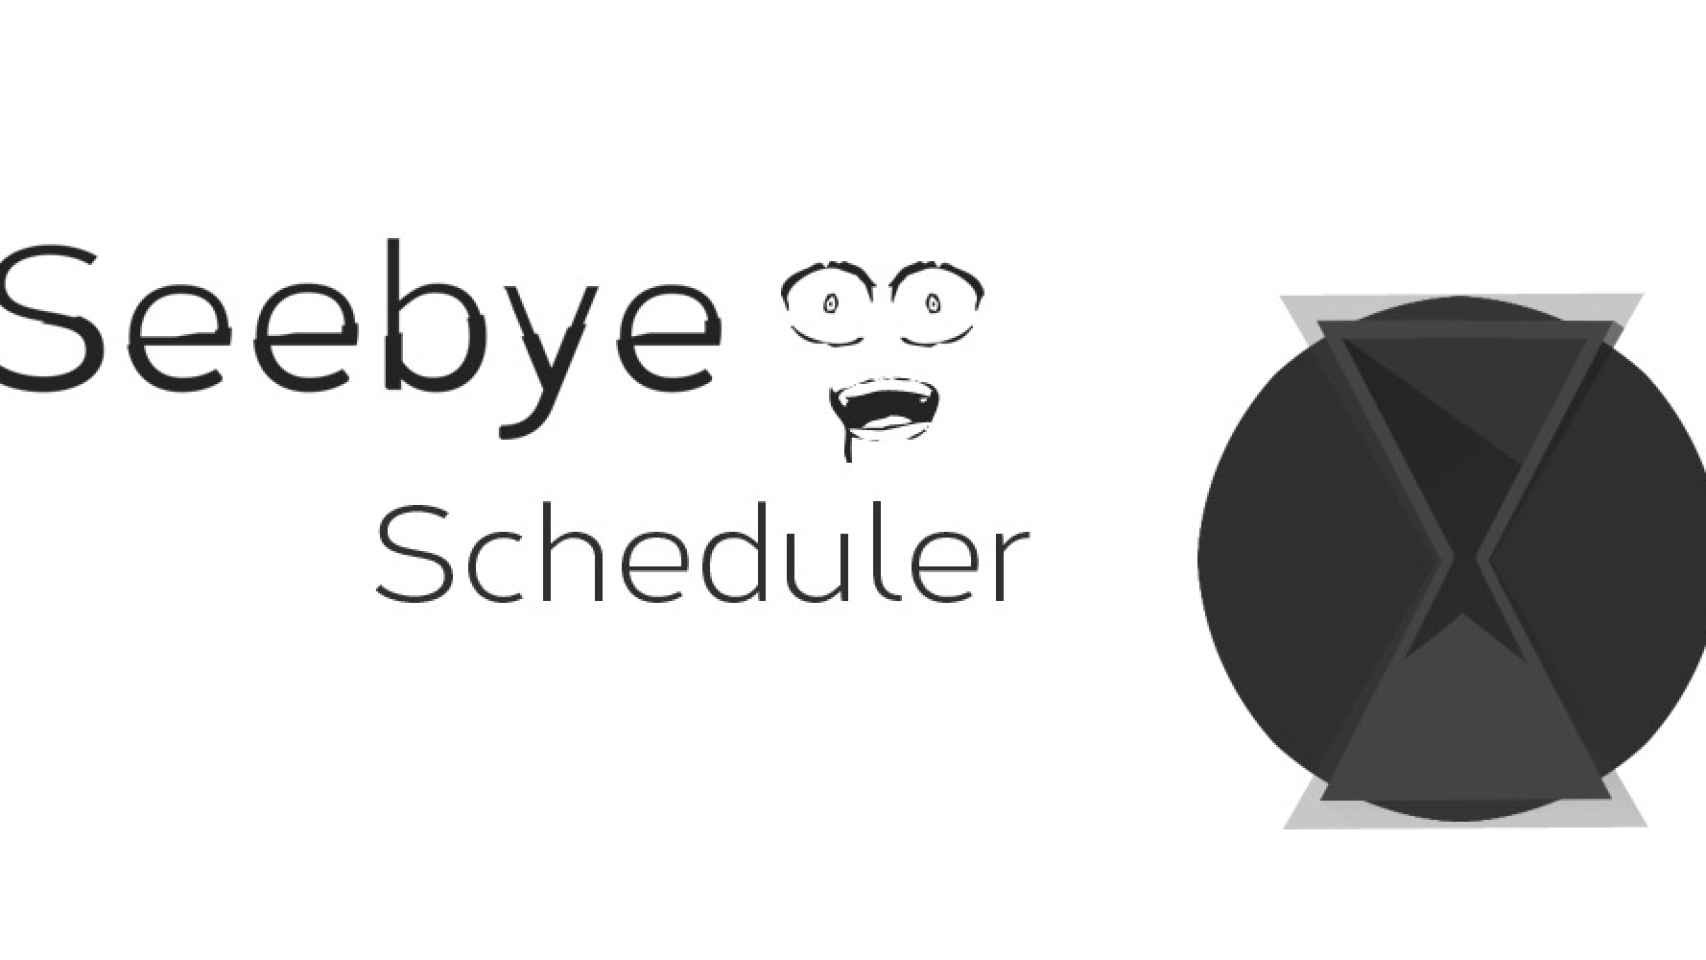 Seebye Scheduler, programa mensajes en WhatsApp, Viber y SMS [Root]